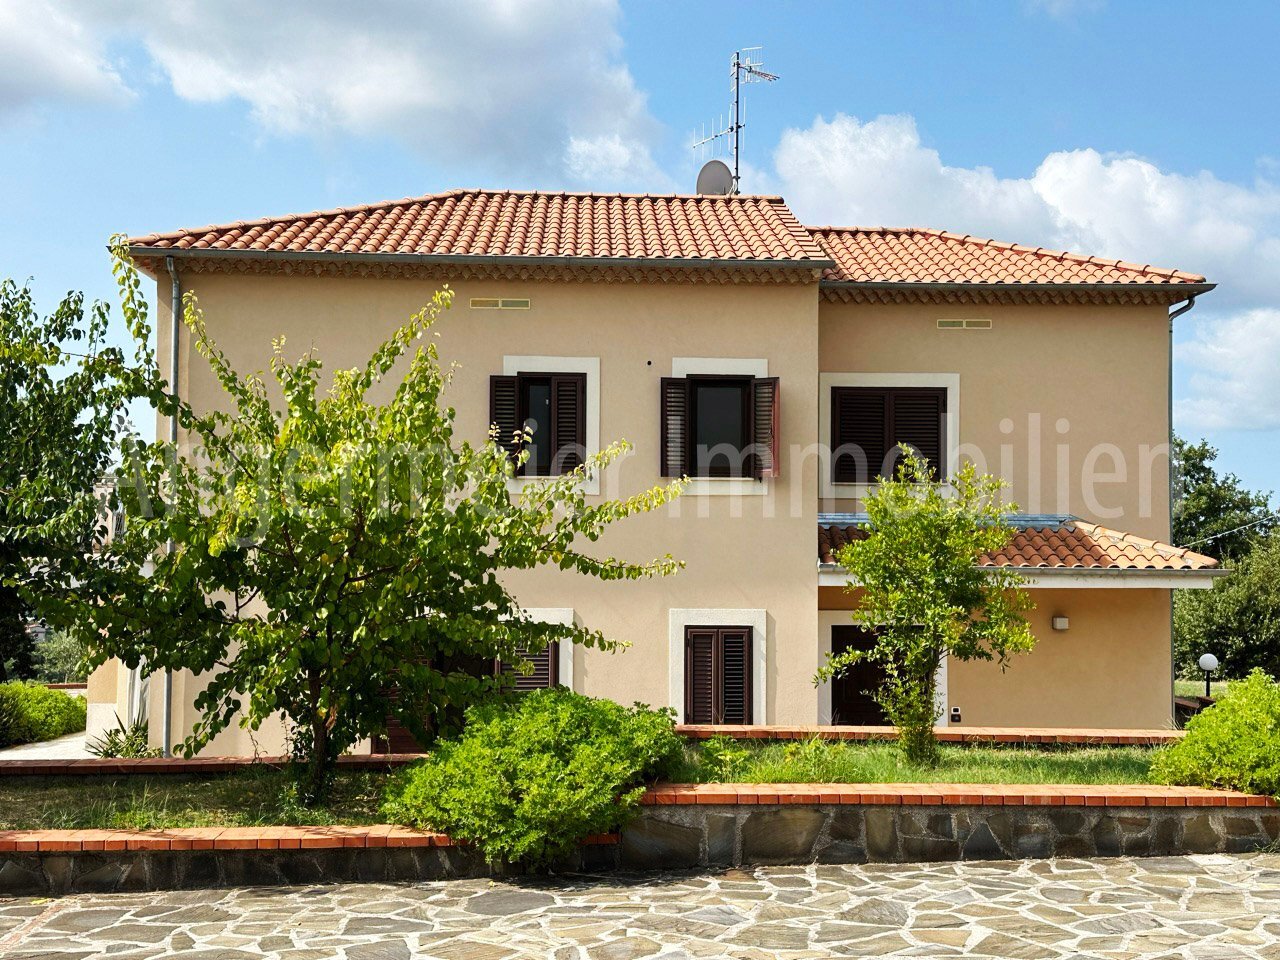 Villa zum Kauf 640.000 € 11 Zimmer 171 m² 4.850 m² Grundstück Moio Della Civitella SA, Italien 84060